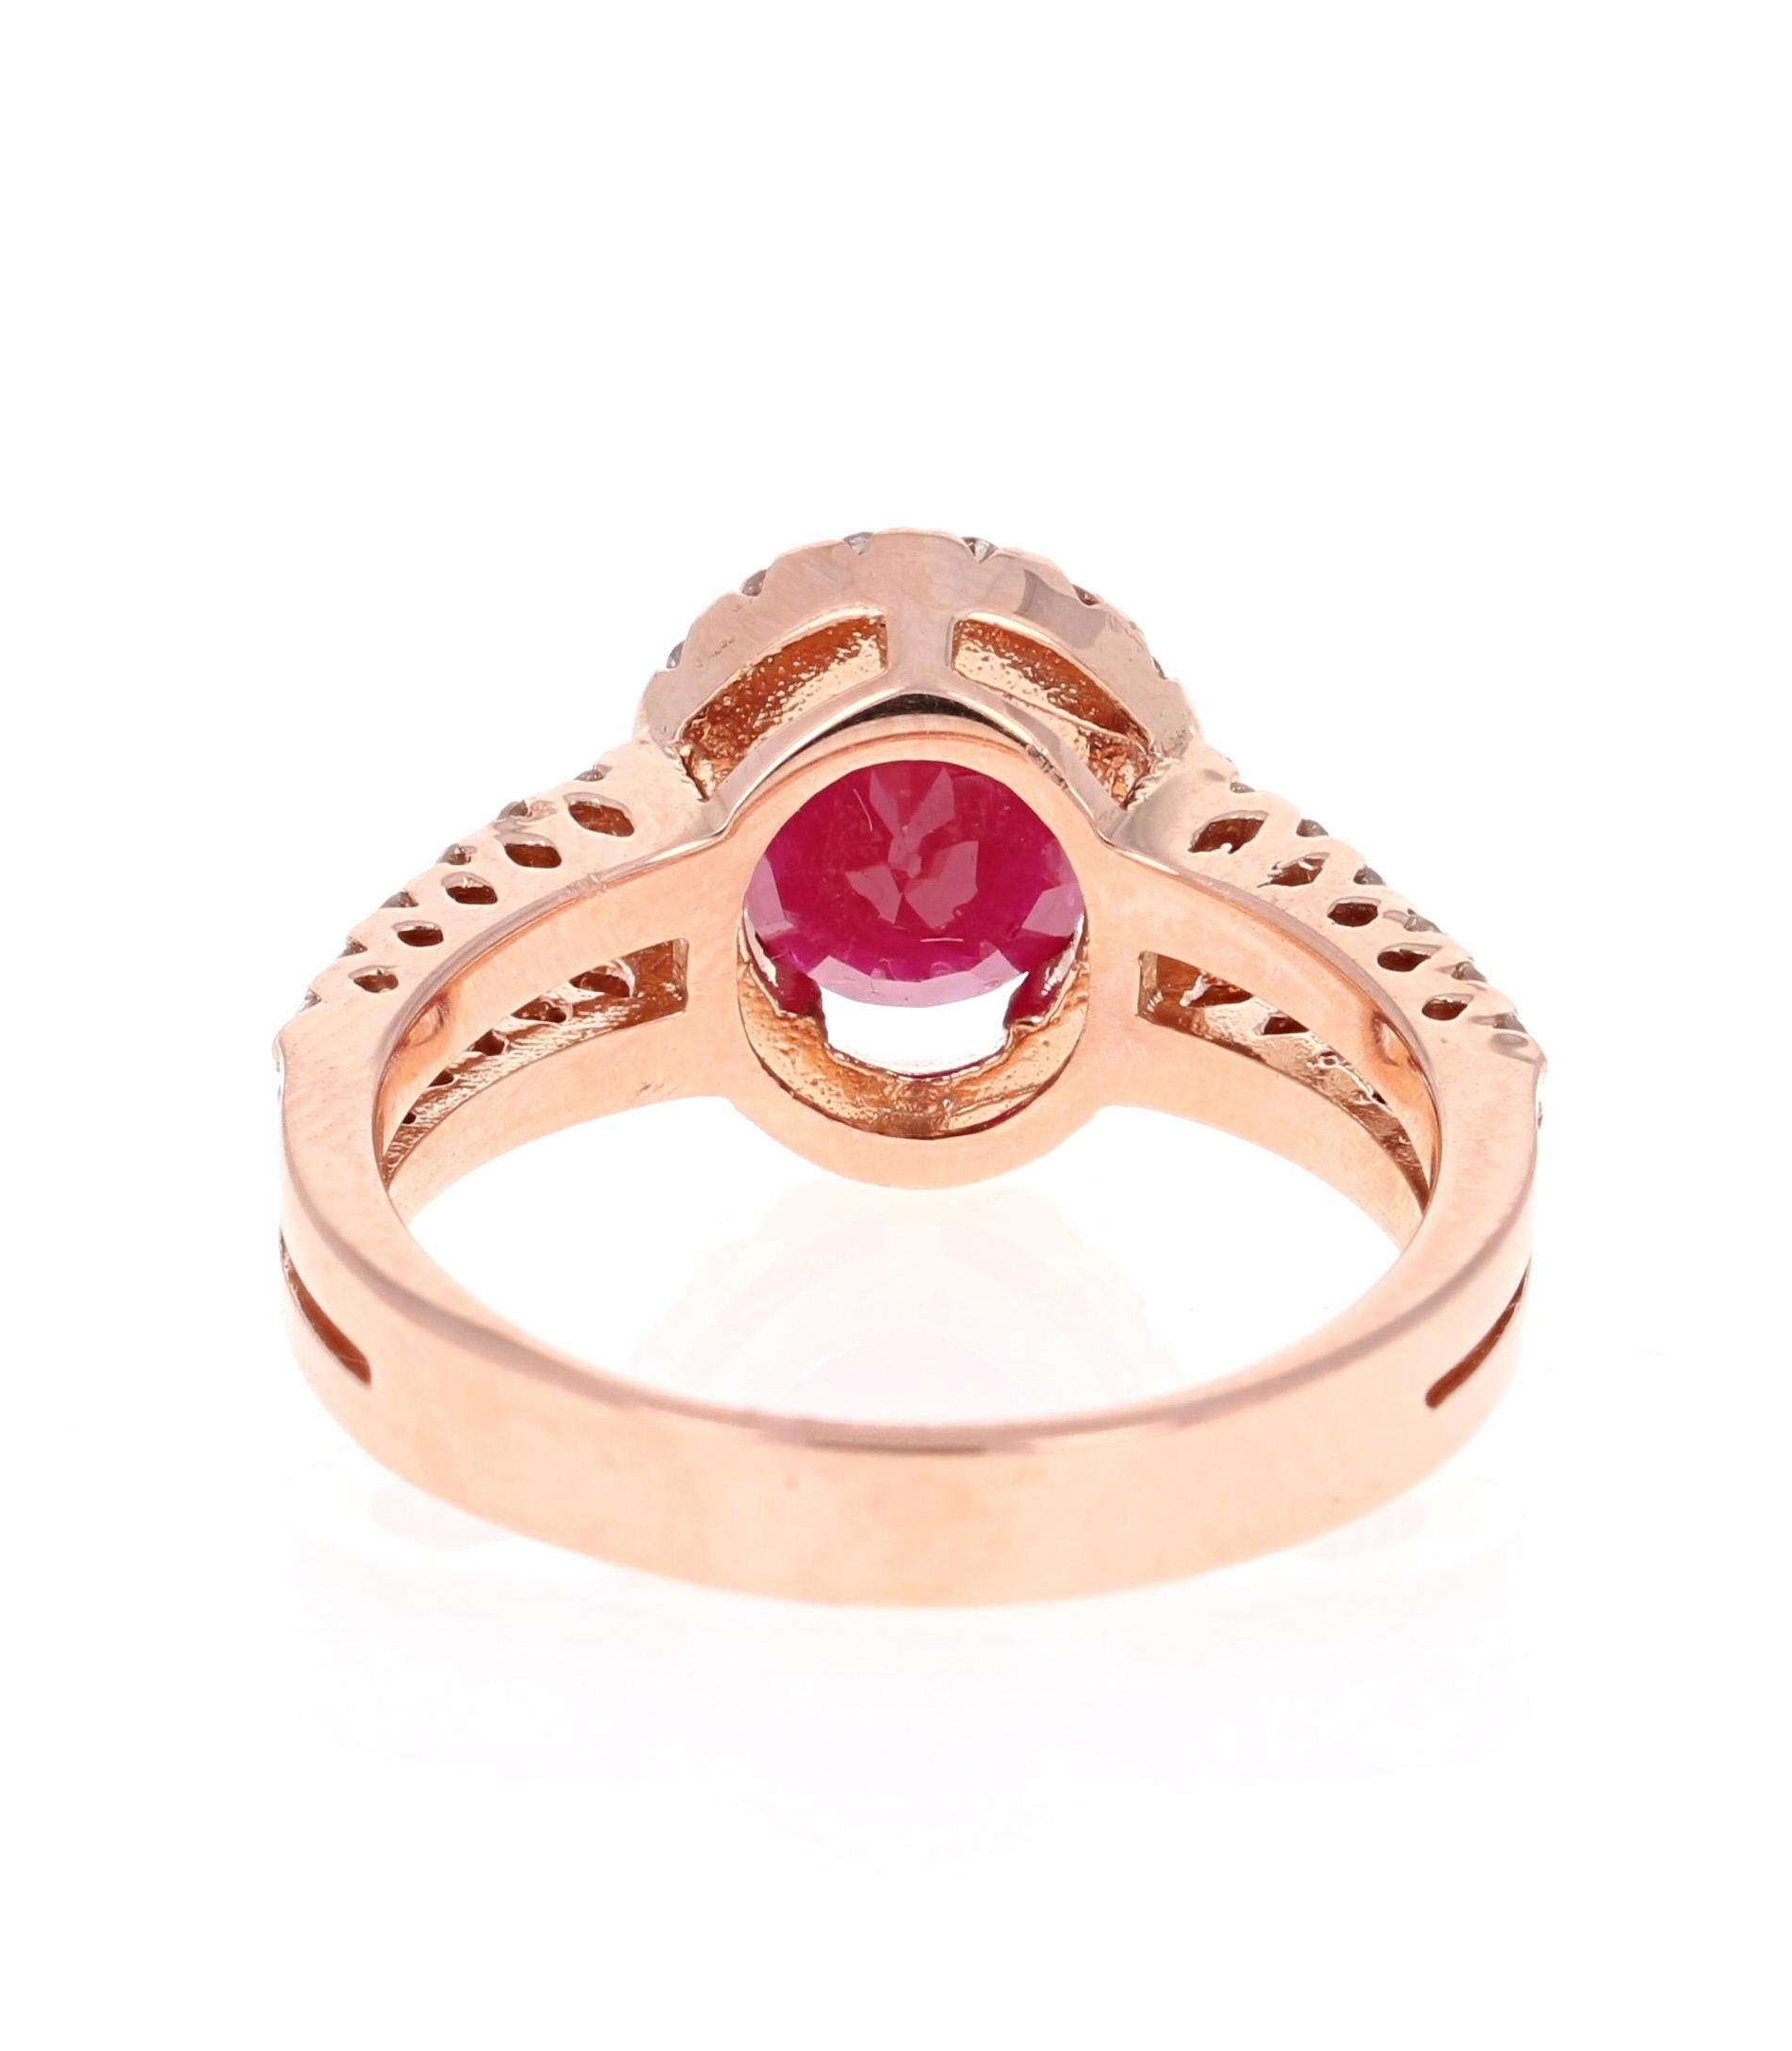 Oval Cut 2.54 Carat Ruby Diamond 14 Karat Rose Gold Ring For Sale